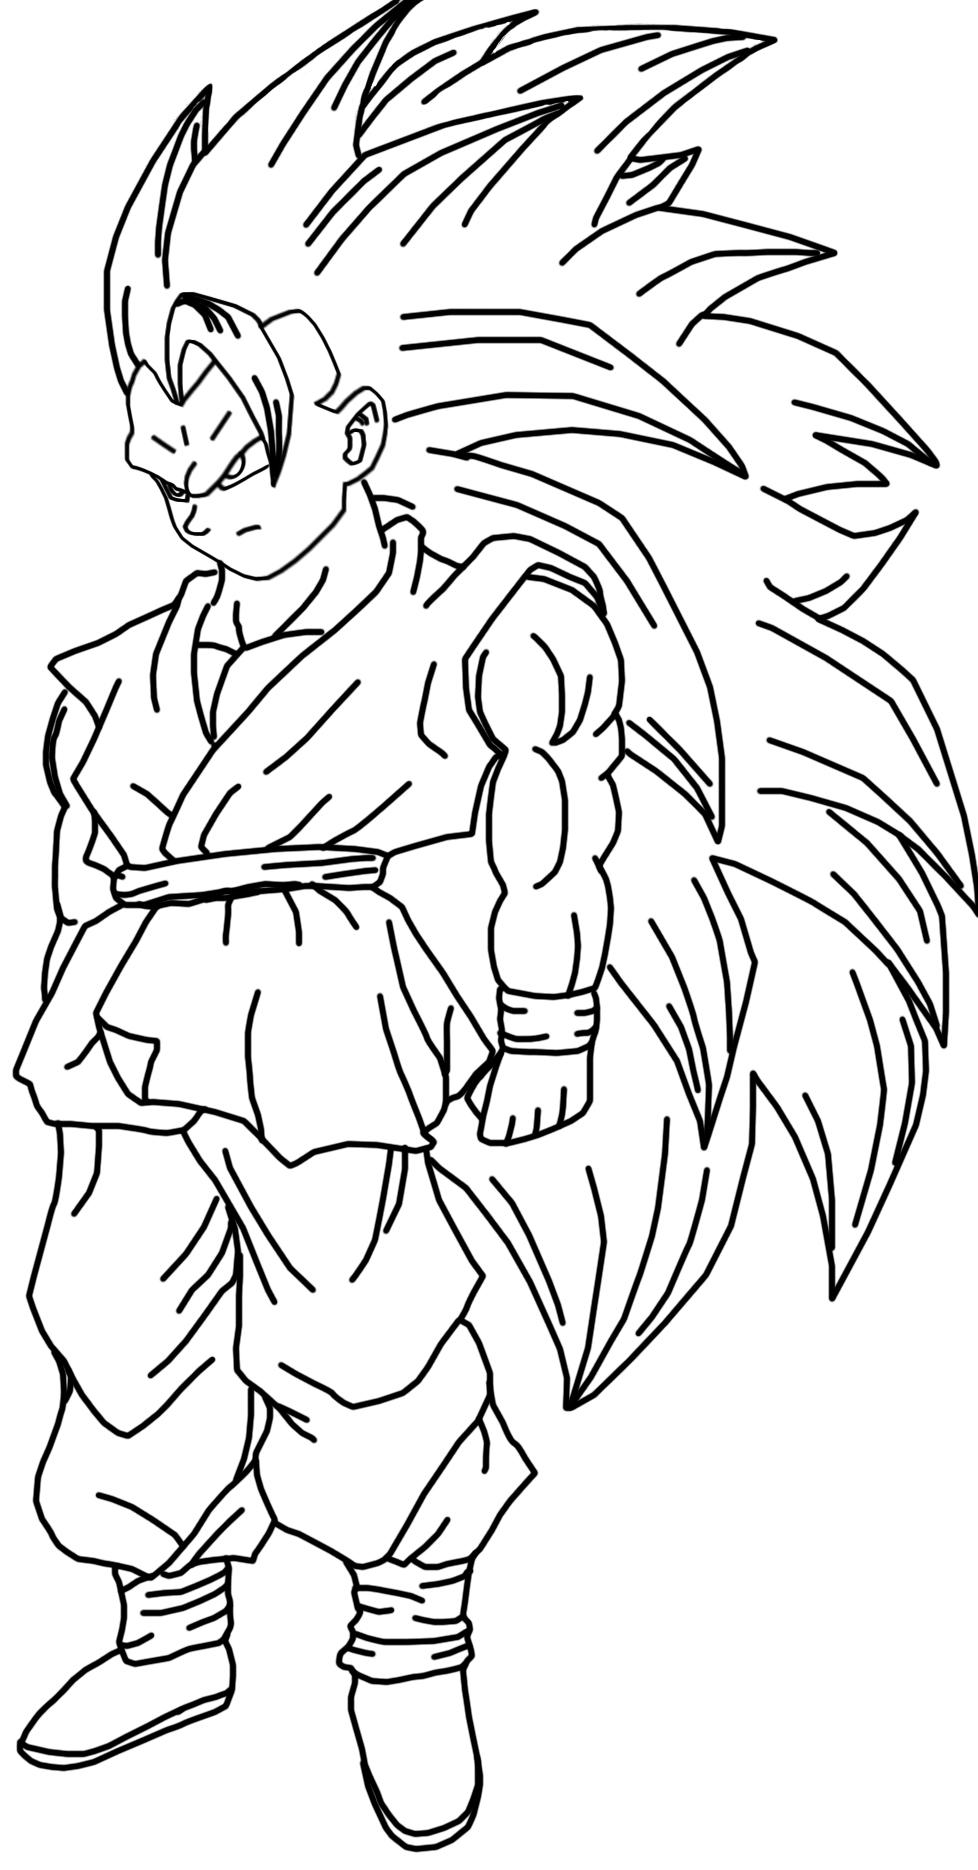 Goku GT Super Saiyan 3 - PASO 2 by rowhat1 on DeviantArt